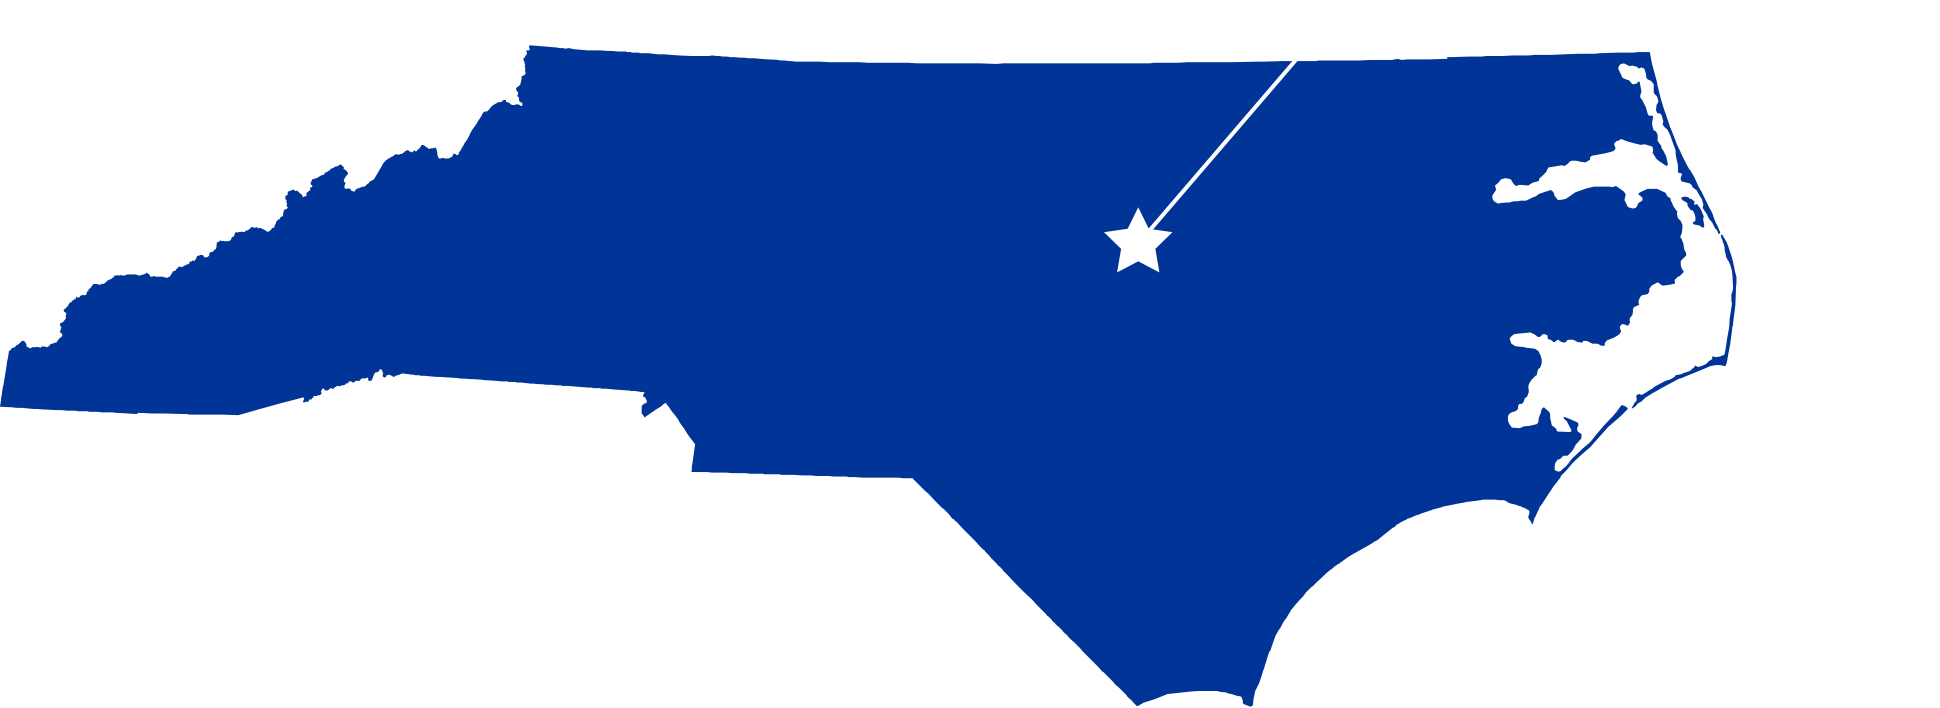 Minimalist North Carolina Clip Art Medium Size - North Carolina Map Vector (1940x708)